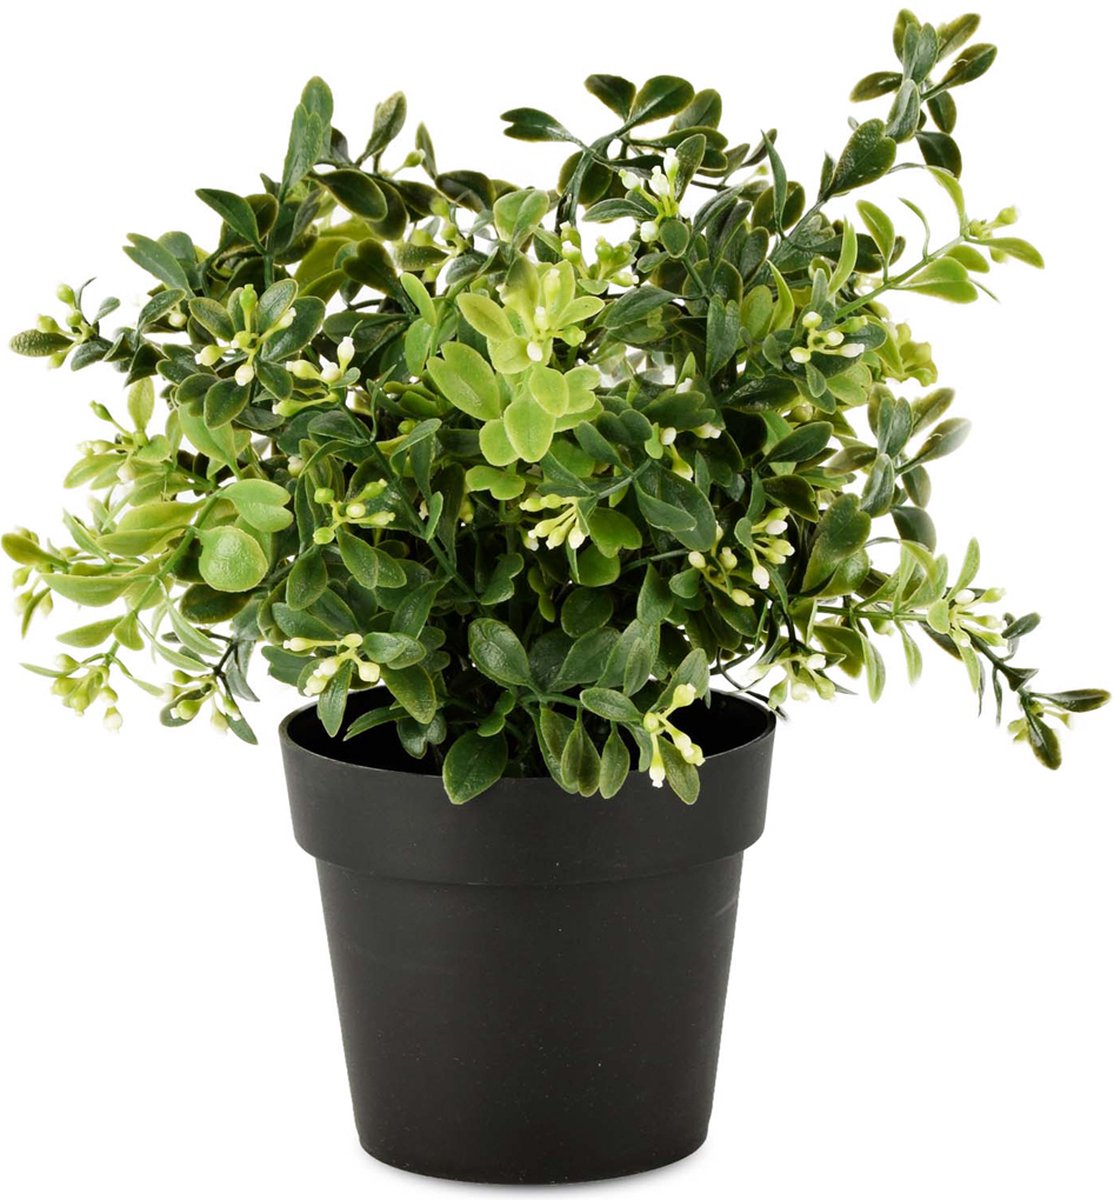 Bloempot groene plant - Groen / wit - 25 x 25 x 24 cm hoog. | bol.com